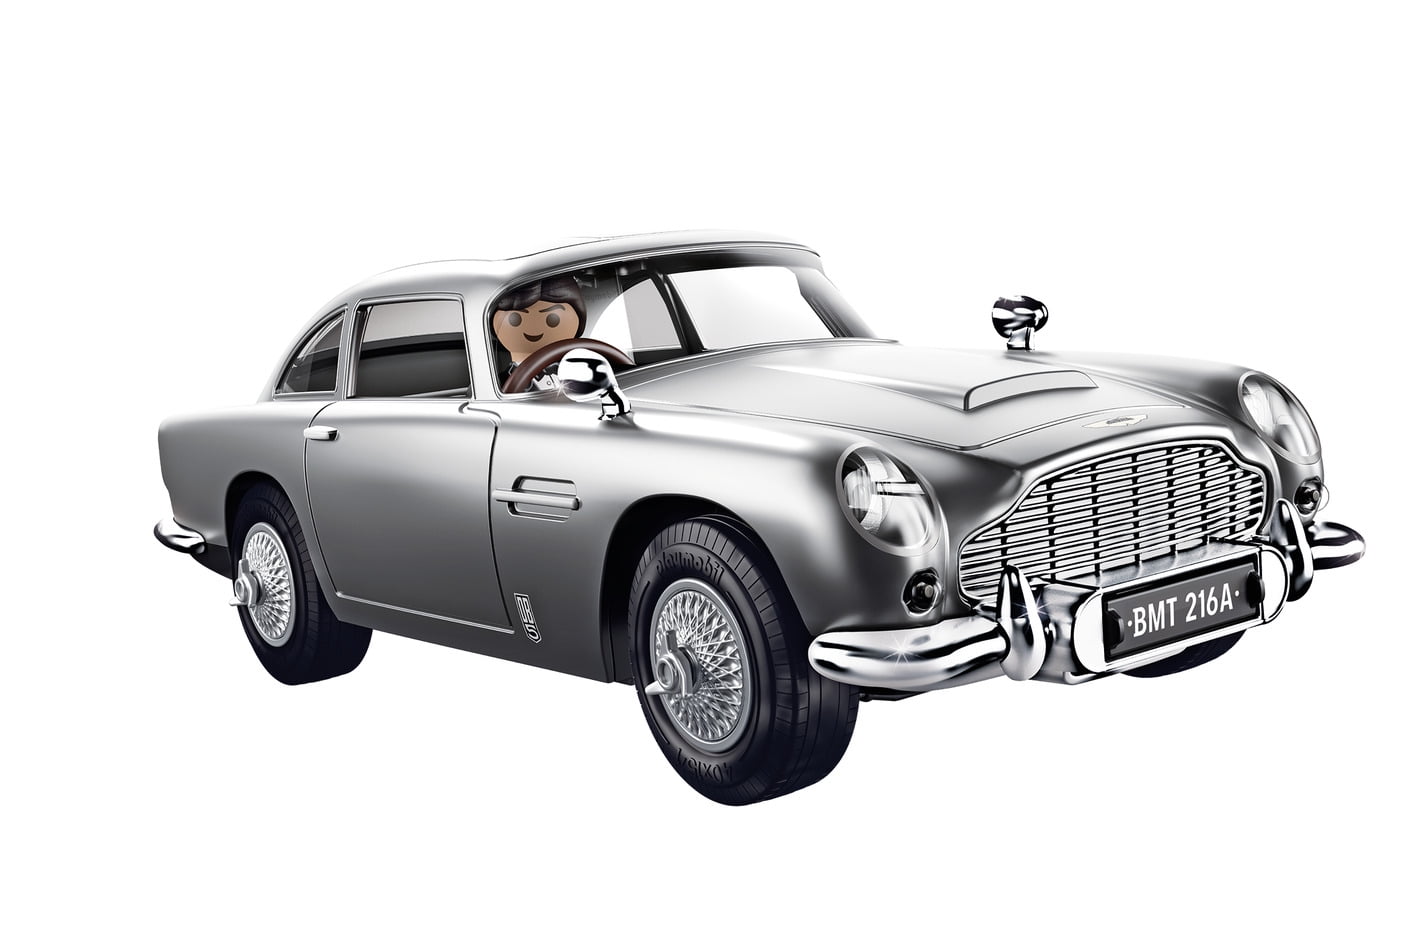 James Bond 007 4 Piece Shell Promotional Vehicles 